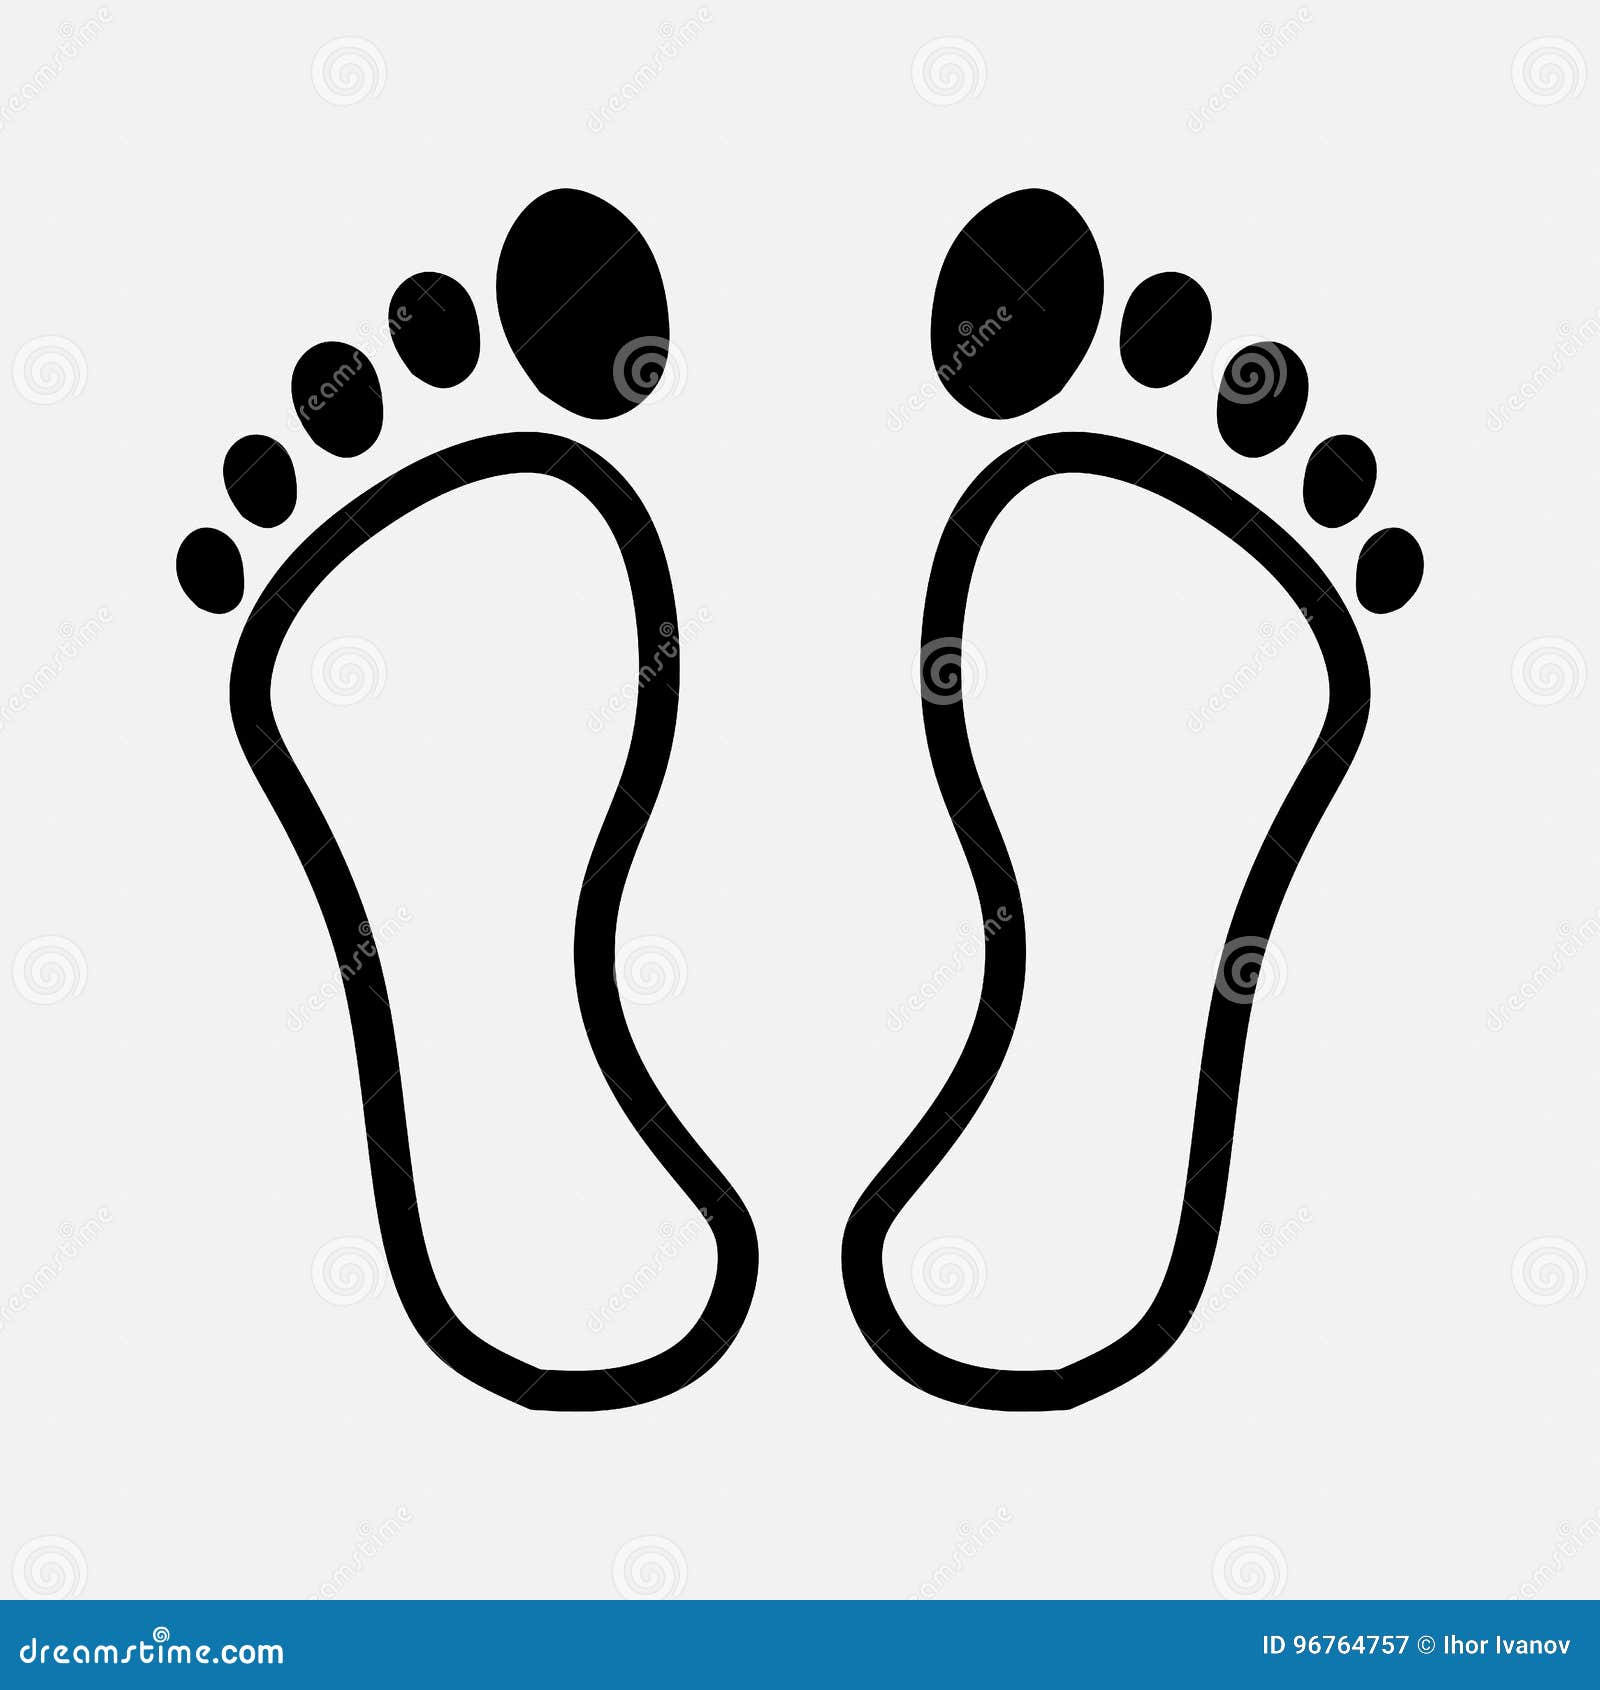 Icon legs, feet stamp stock illustration. Illustration of footprint ...